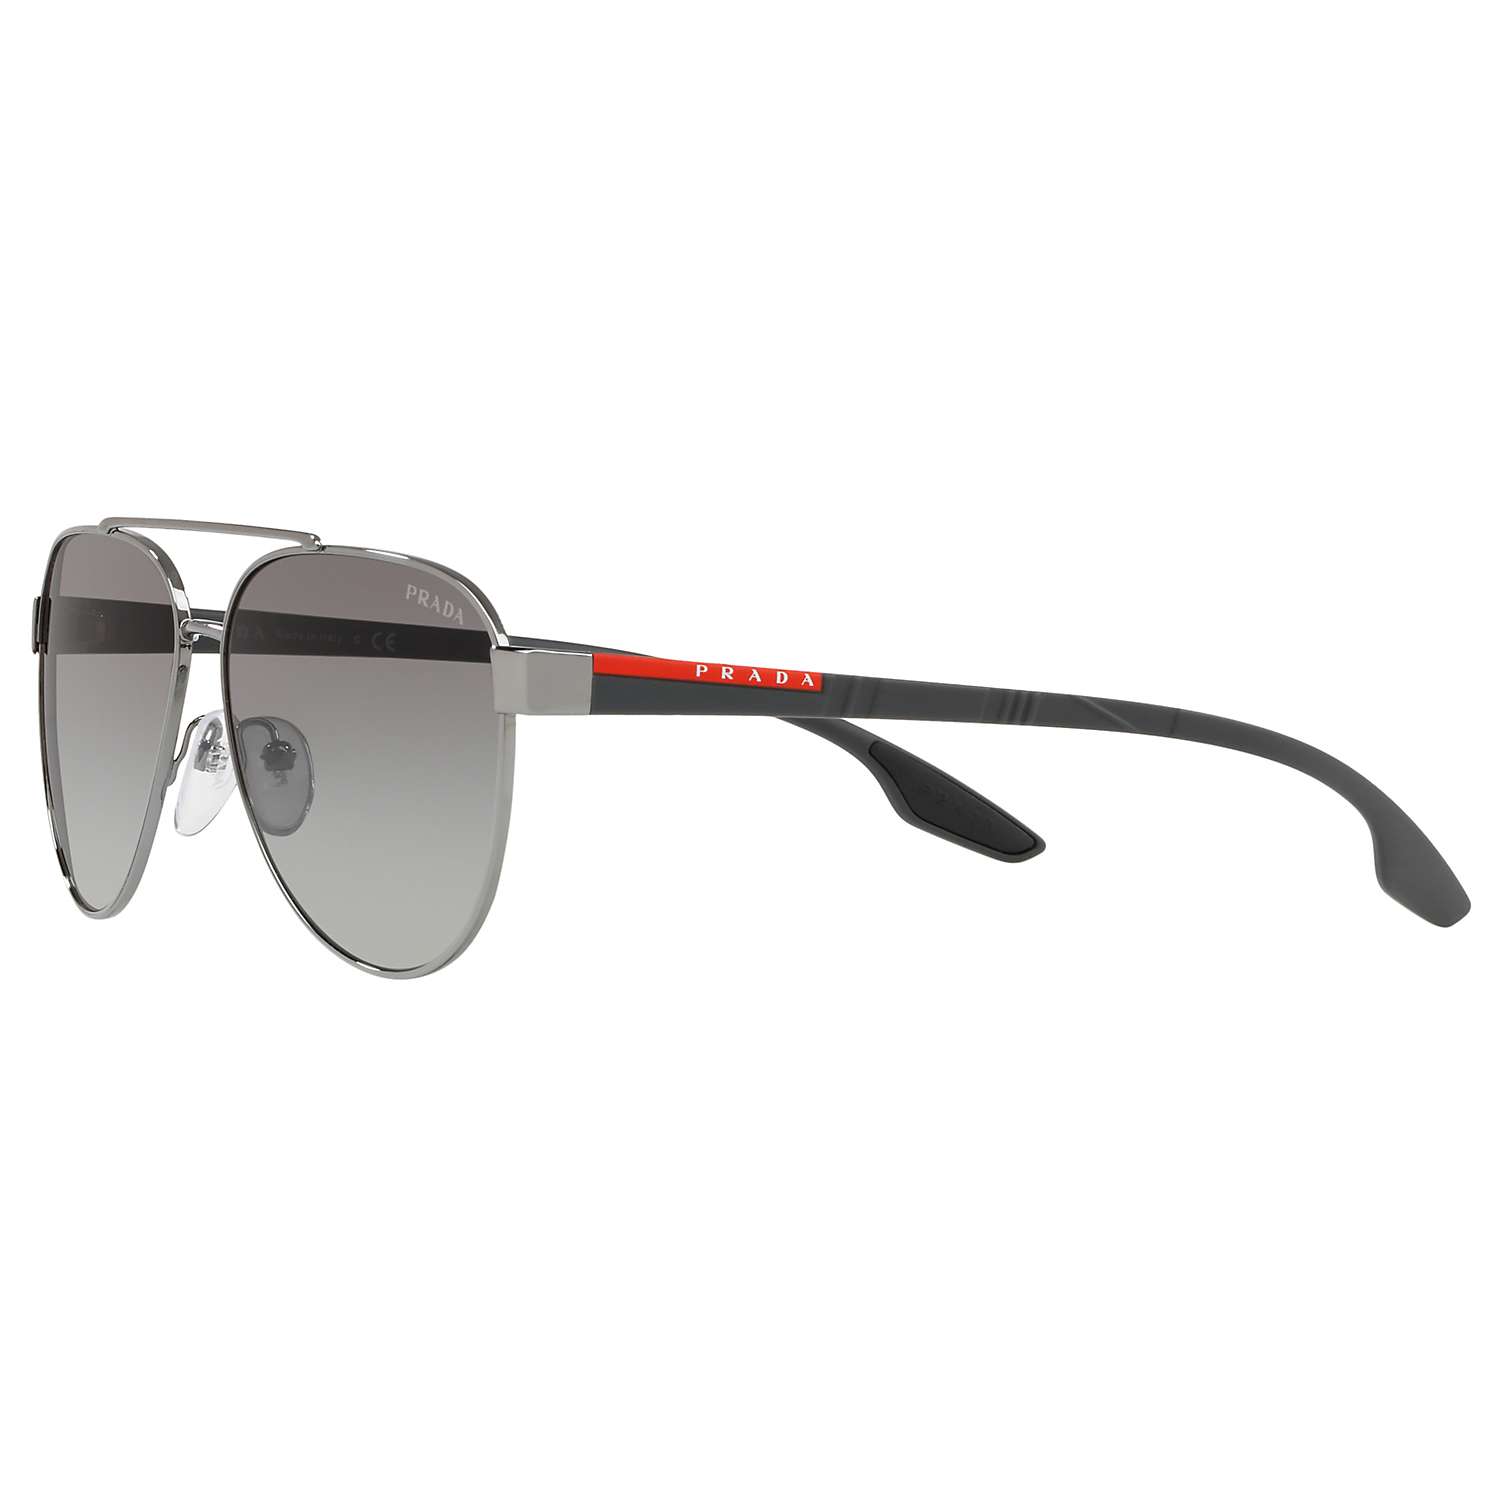 Buy Prada Linea Rossa PS 54TS Men's Aviator Sunglasses, Gunmetal/Grey Gradient Online at johnlewis.com